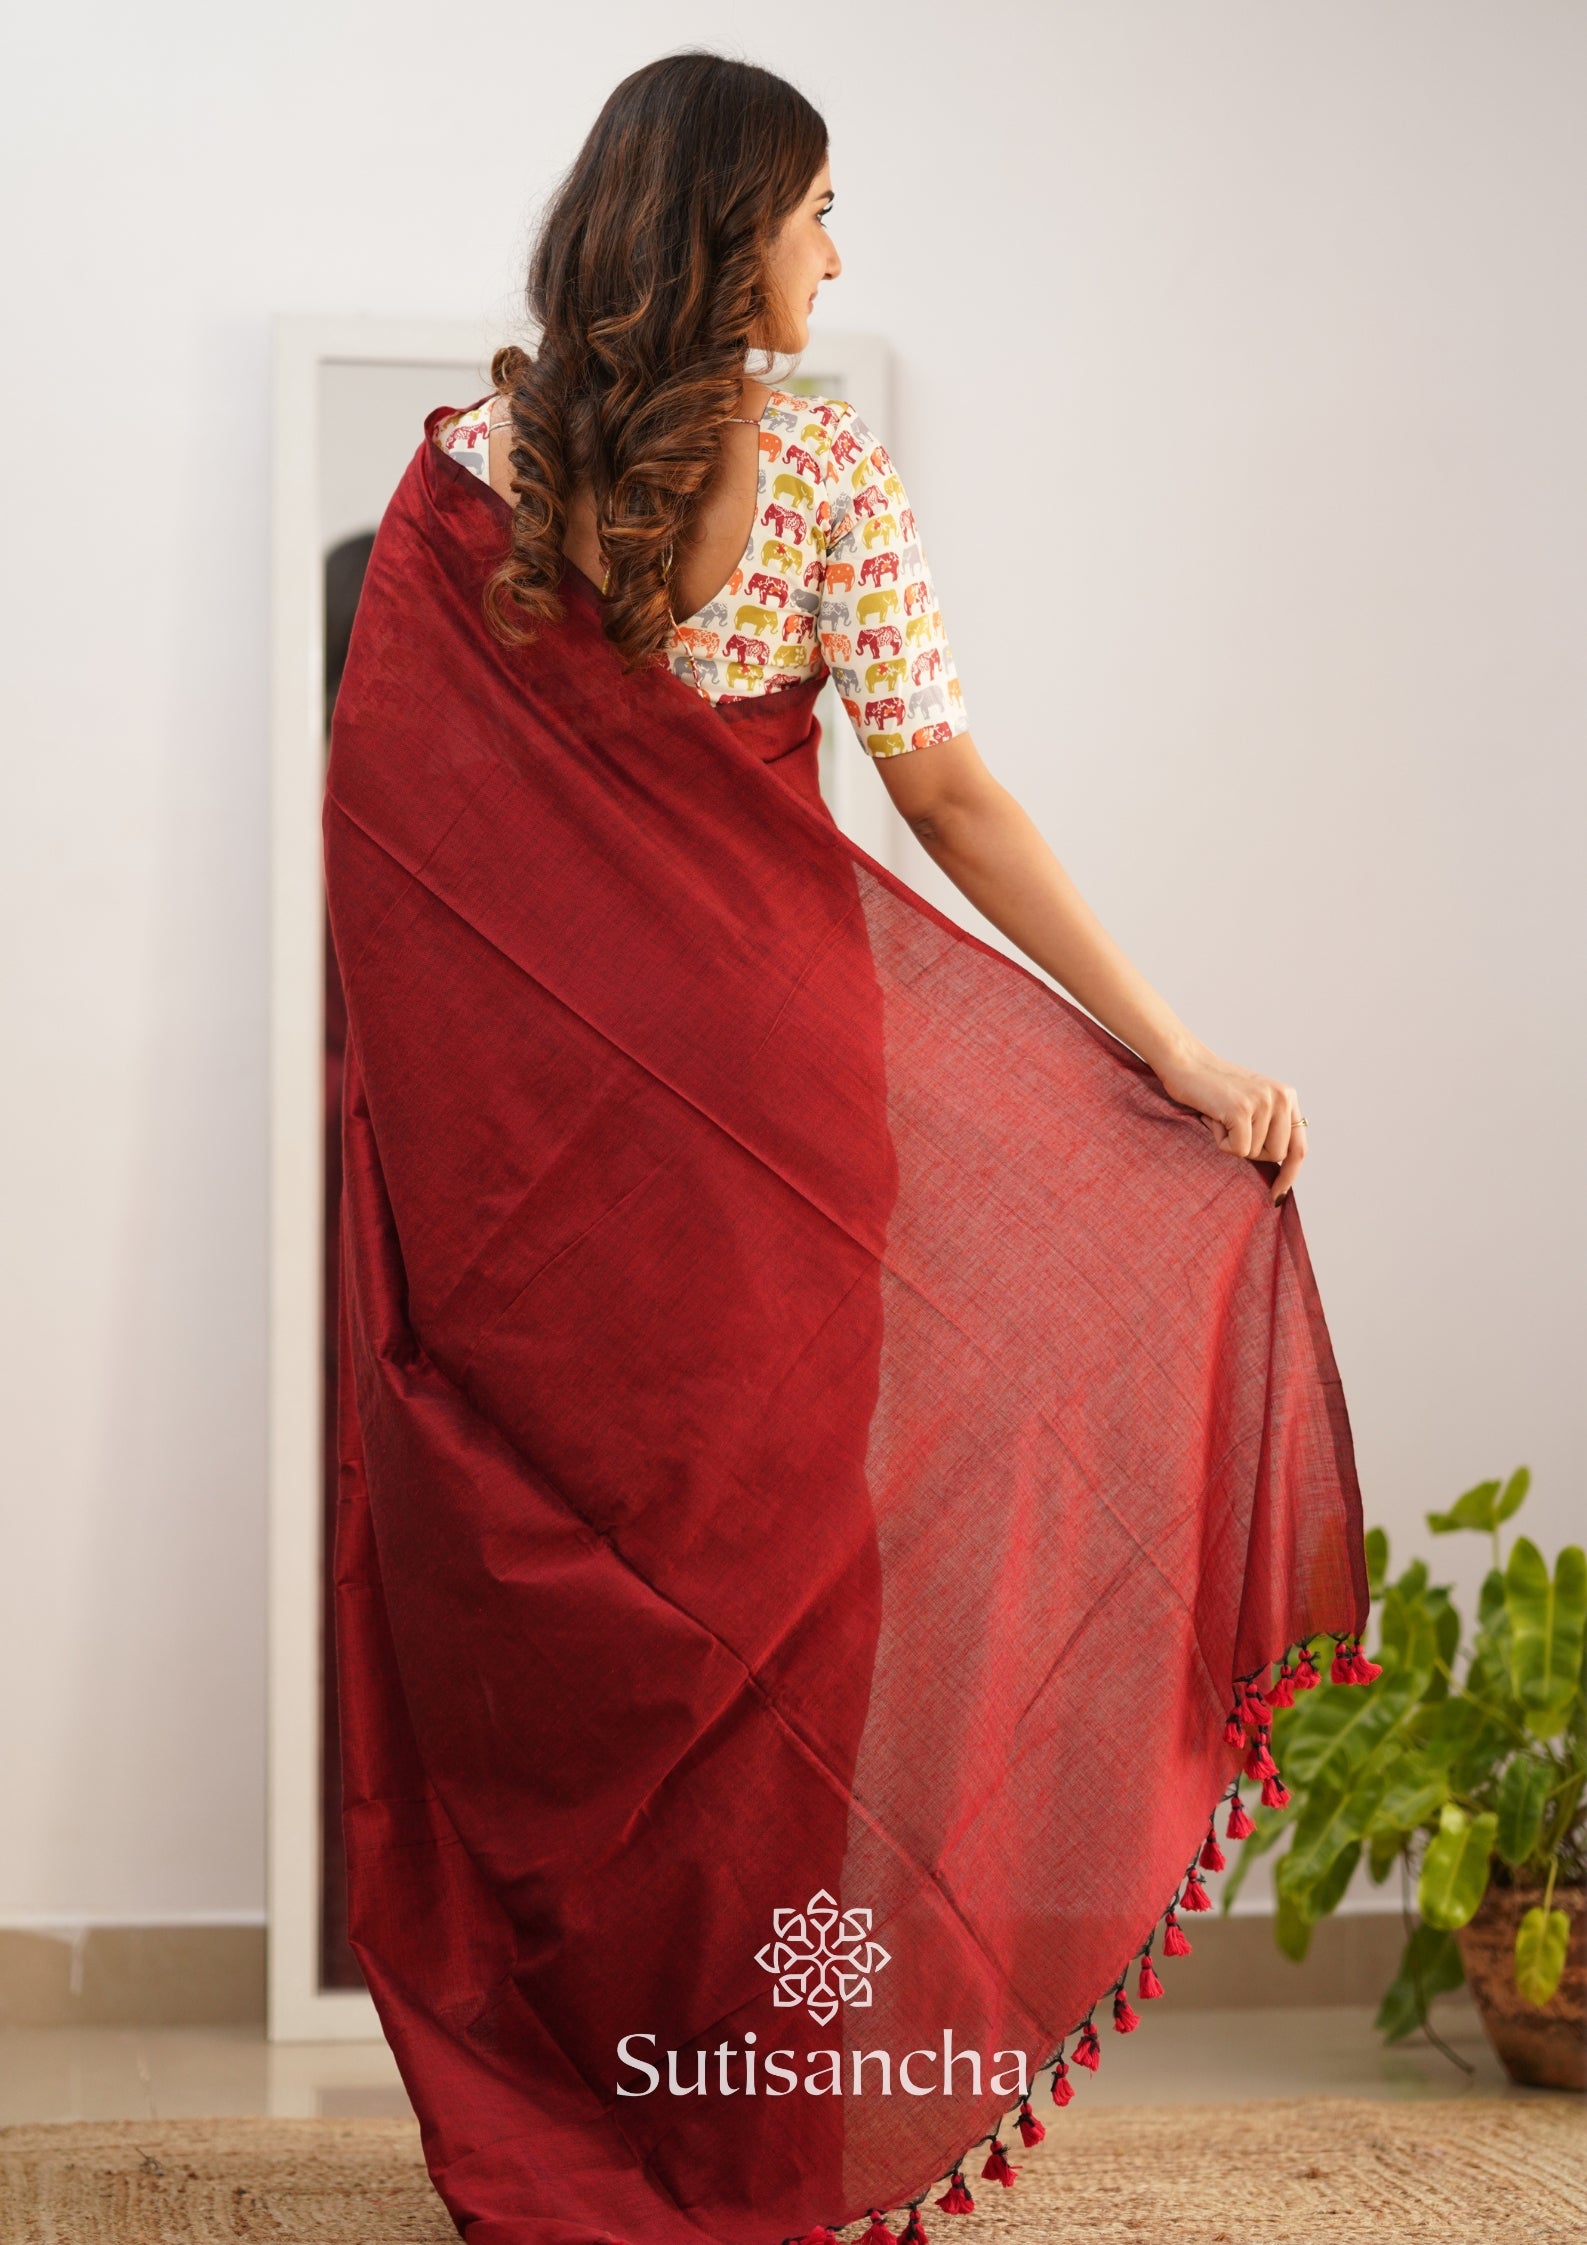 Sutisancha Cherry Maroon Handloom Cotton Saree With Blouse